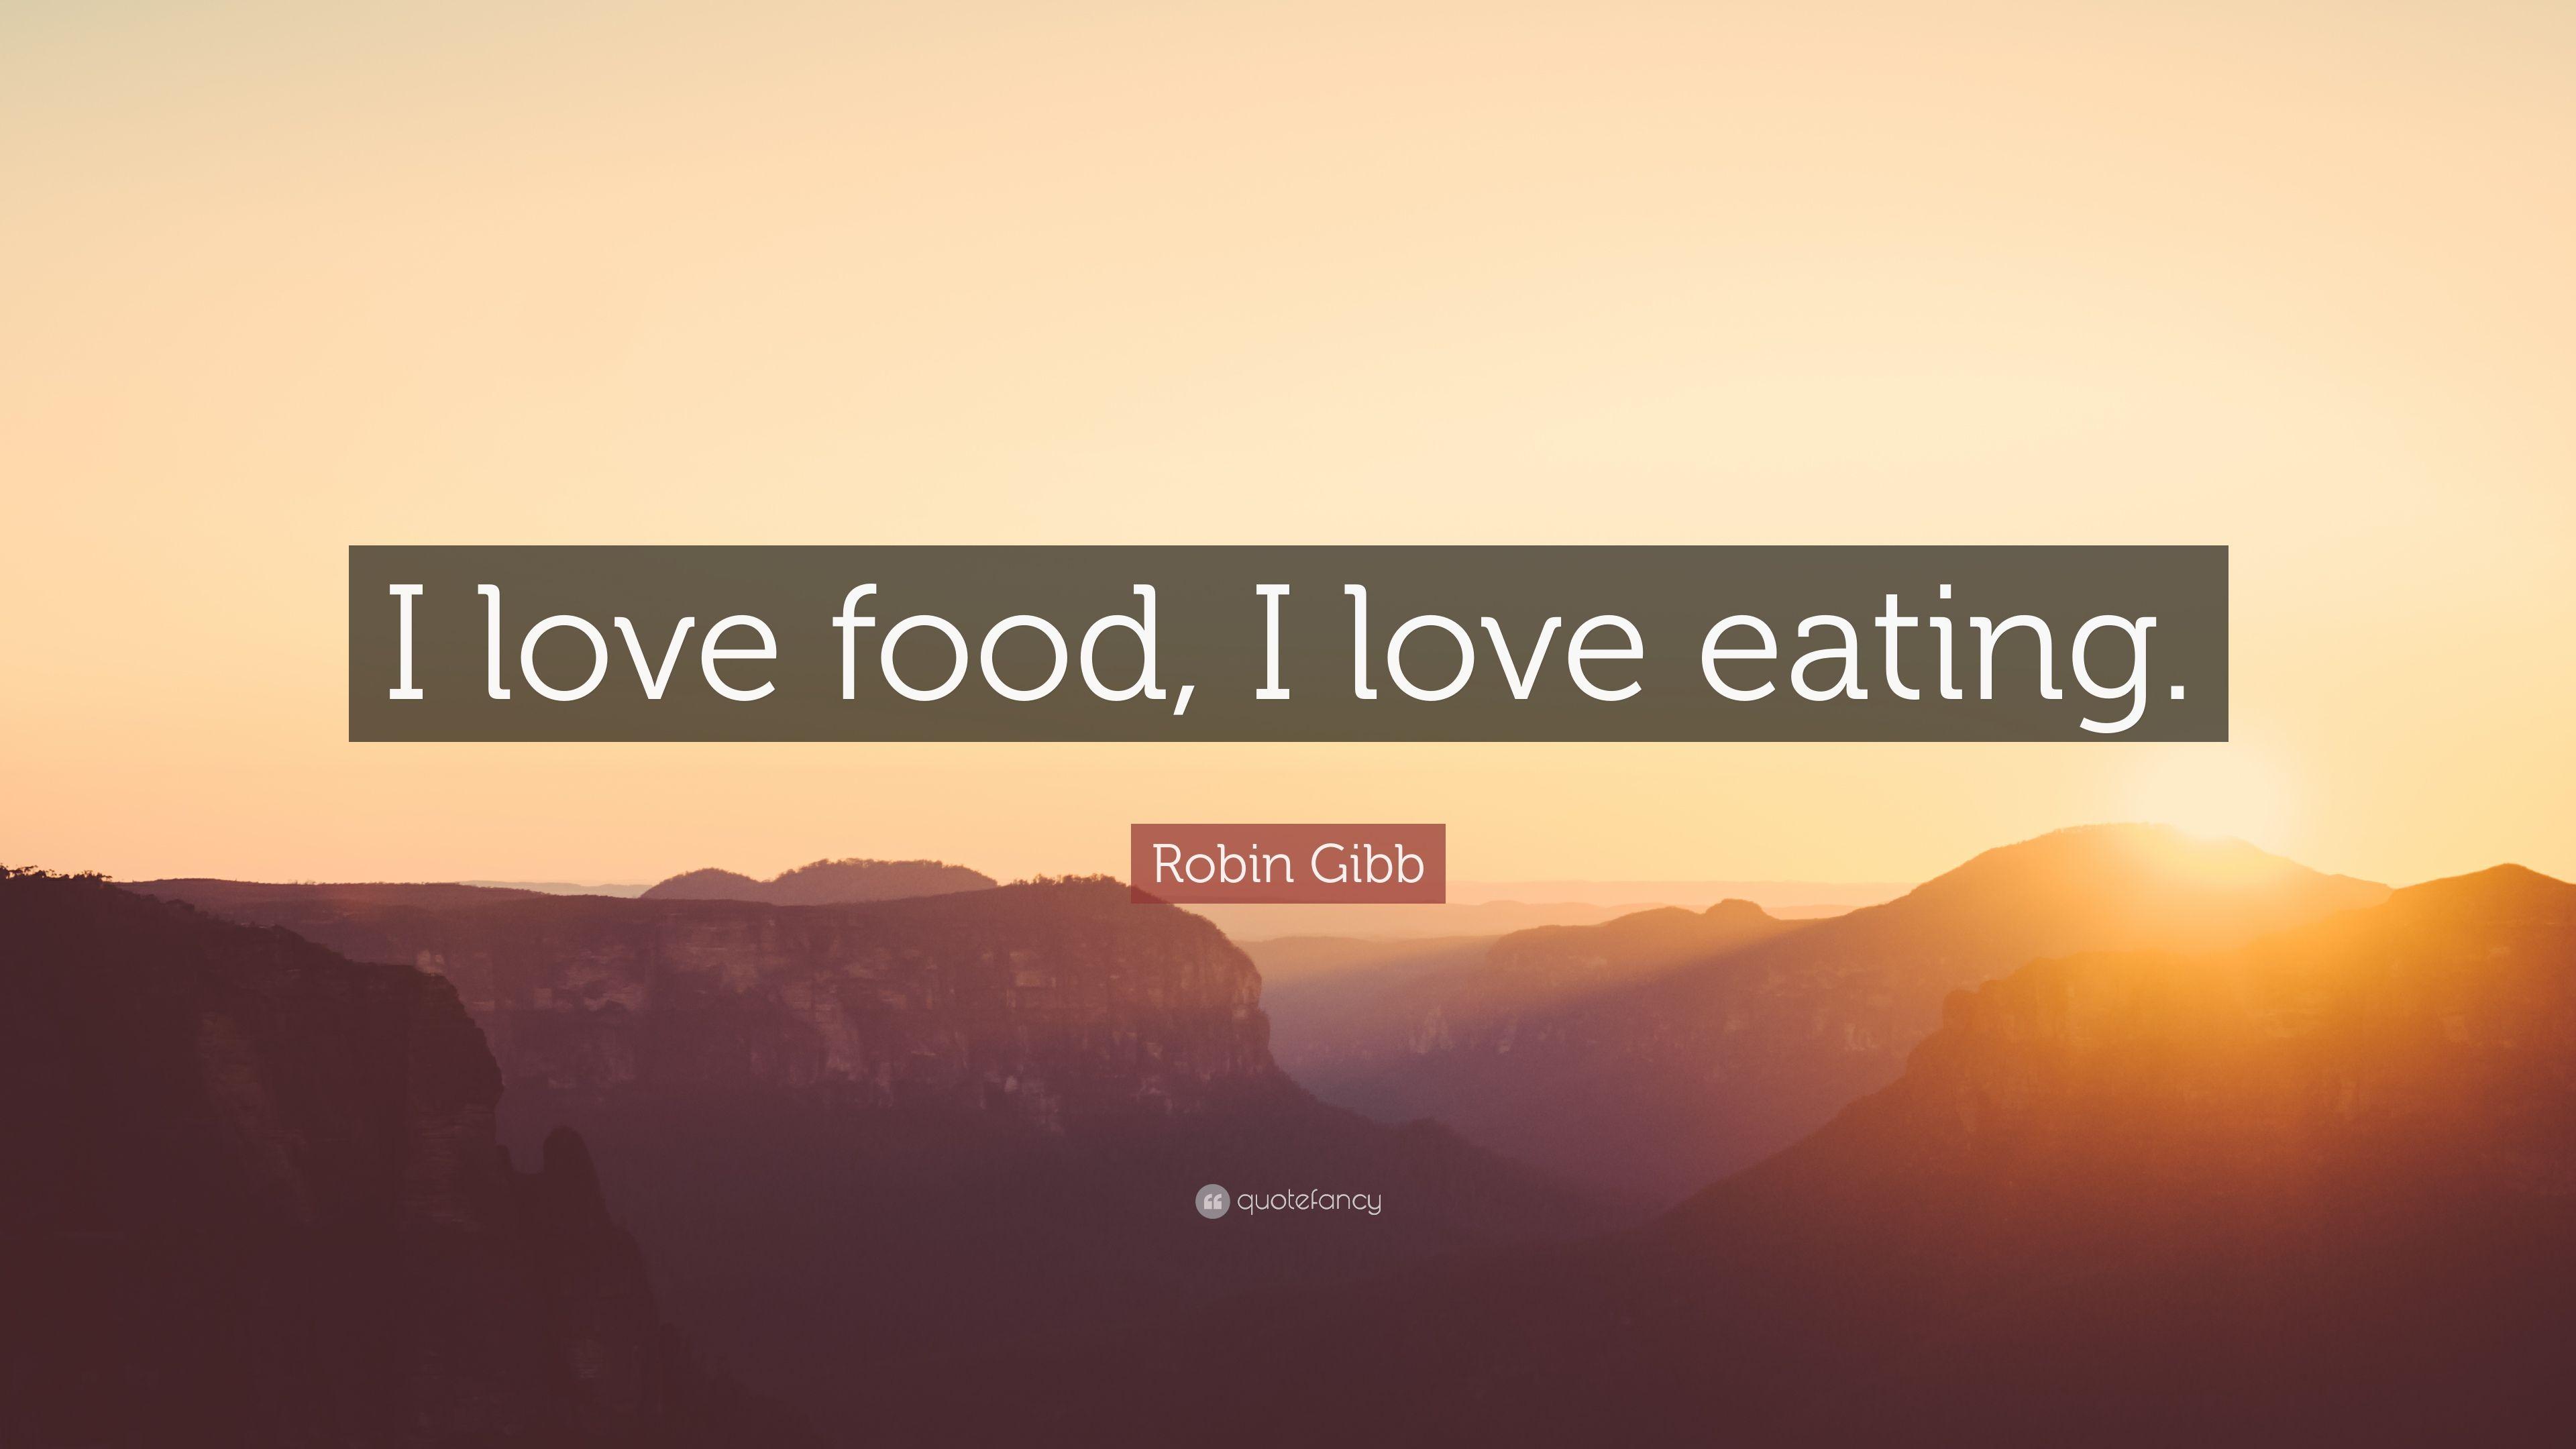 Robin Gibb Quote: “I love food, I love eating.” 12 wallpaper